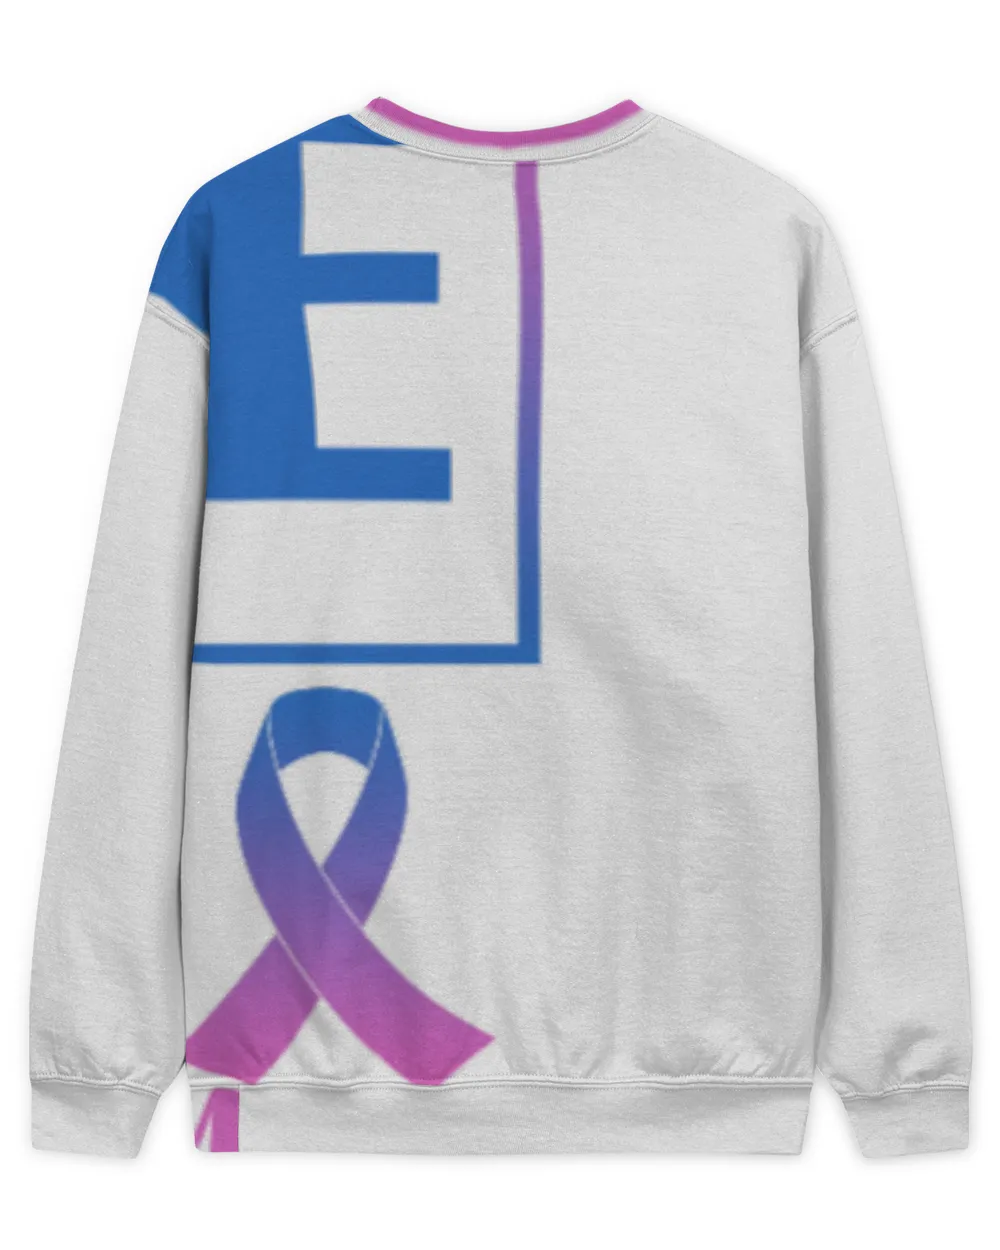 I Wear Pink Blue For My Kind Mother Thyroid Cancer Awareness